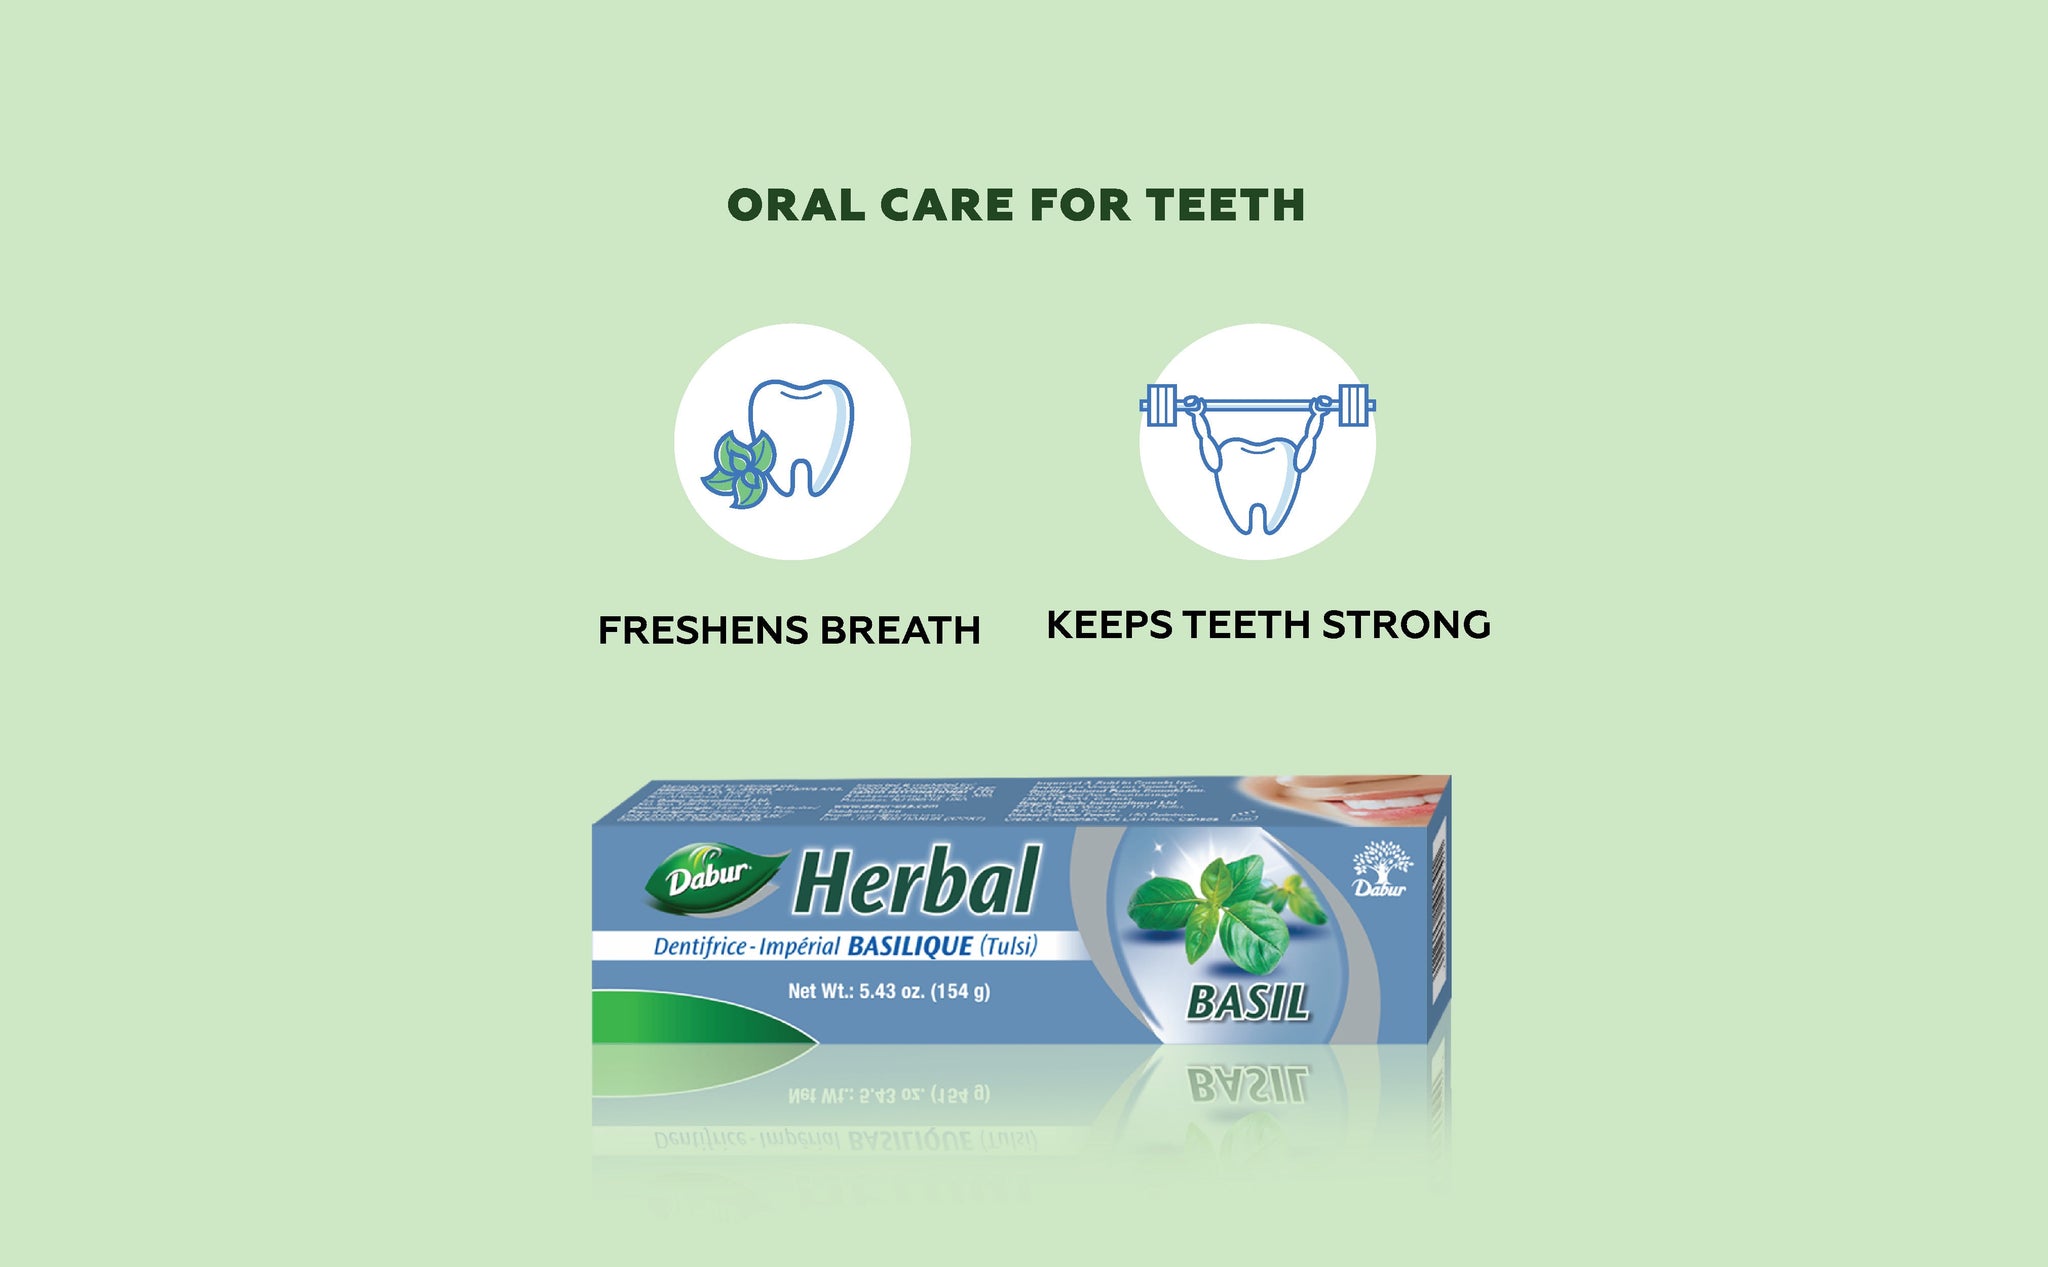 Dabur Herbal Toothpaste - Basil